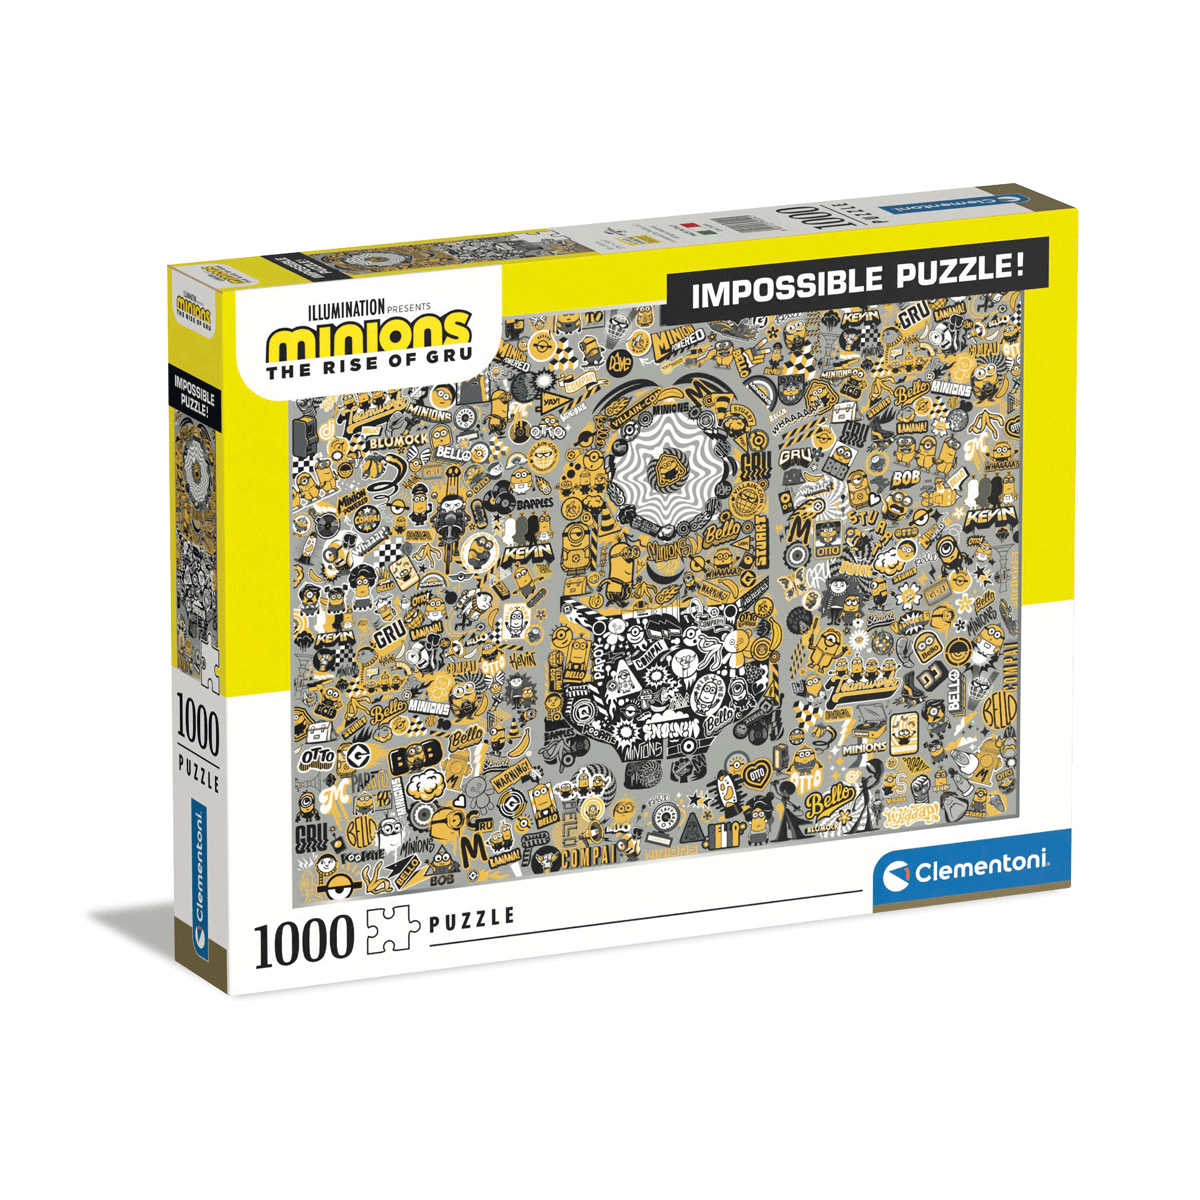 Clementoni - puzzle impossible minions 2 - 1000 pezzi - 